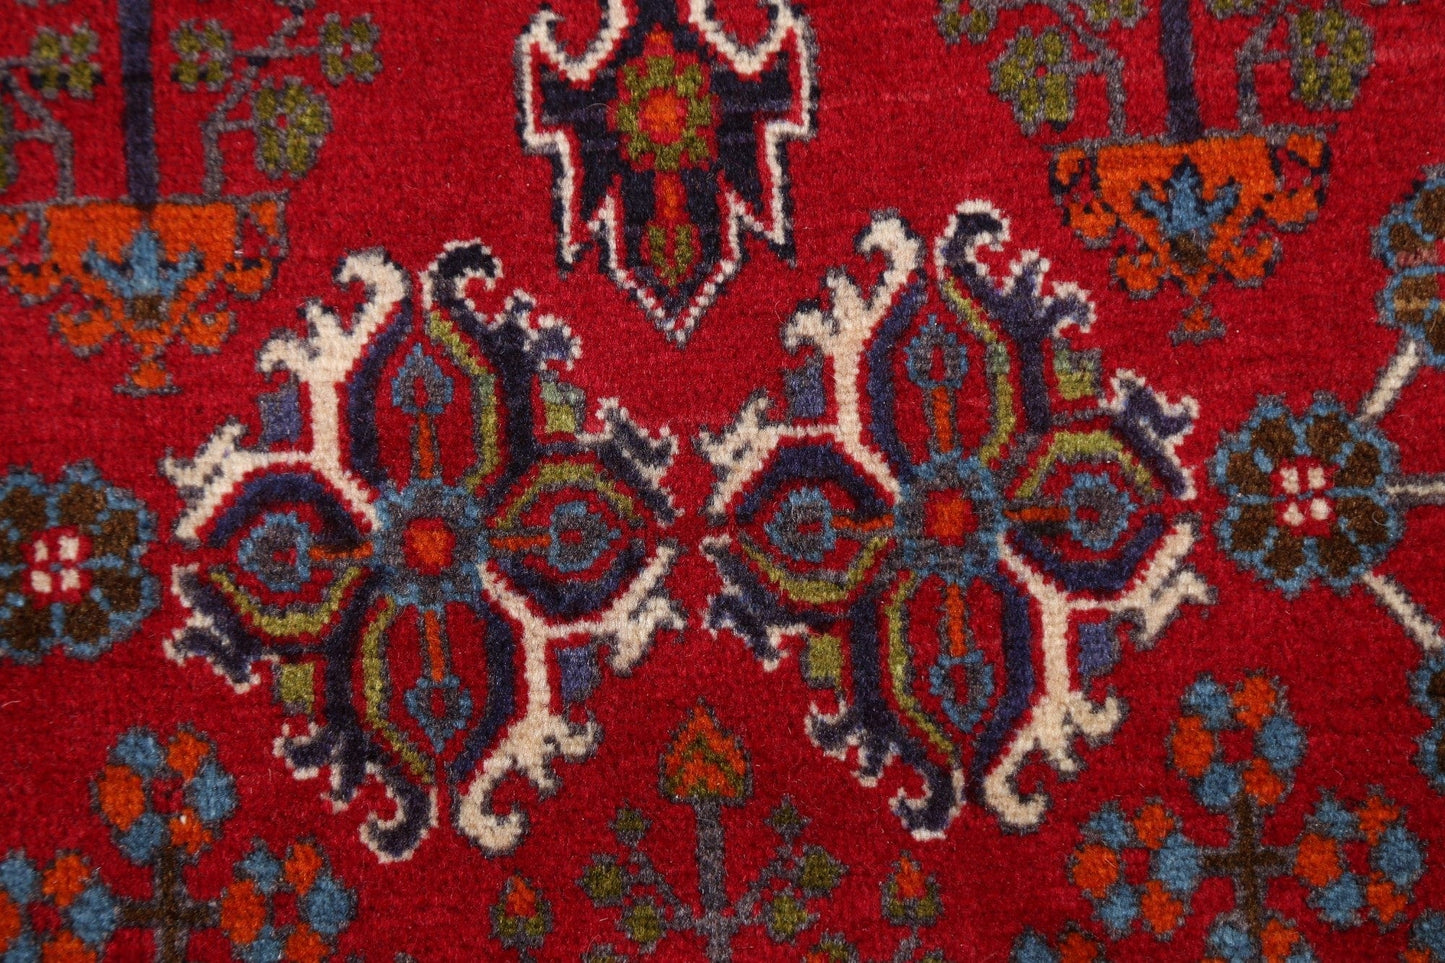 Handmade Joshaghan Persian Wool Rug 4x5